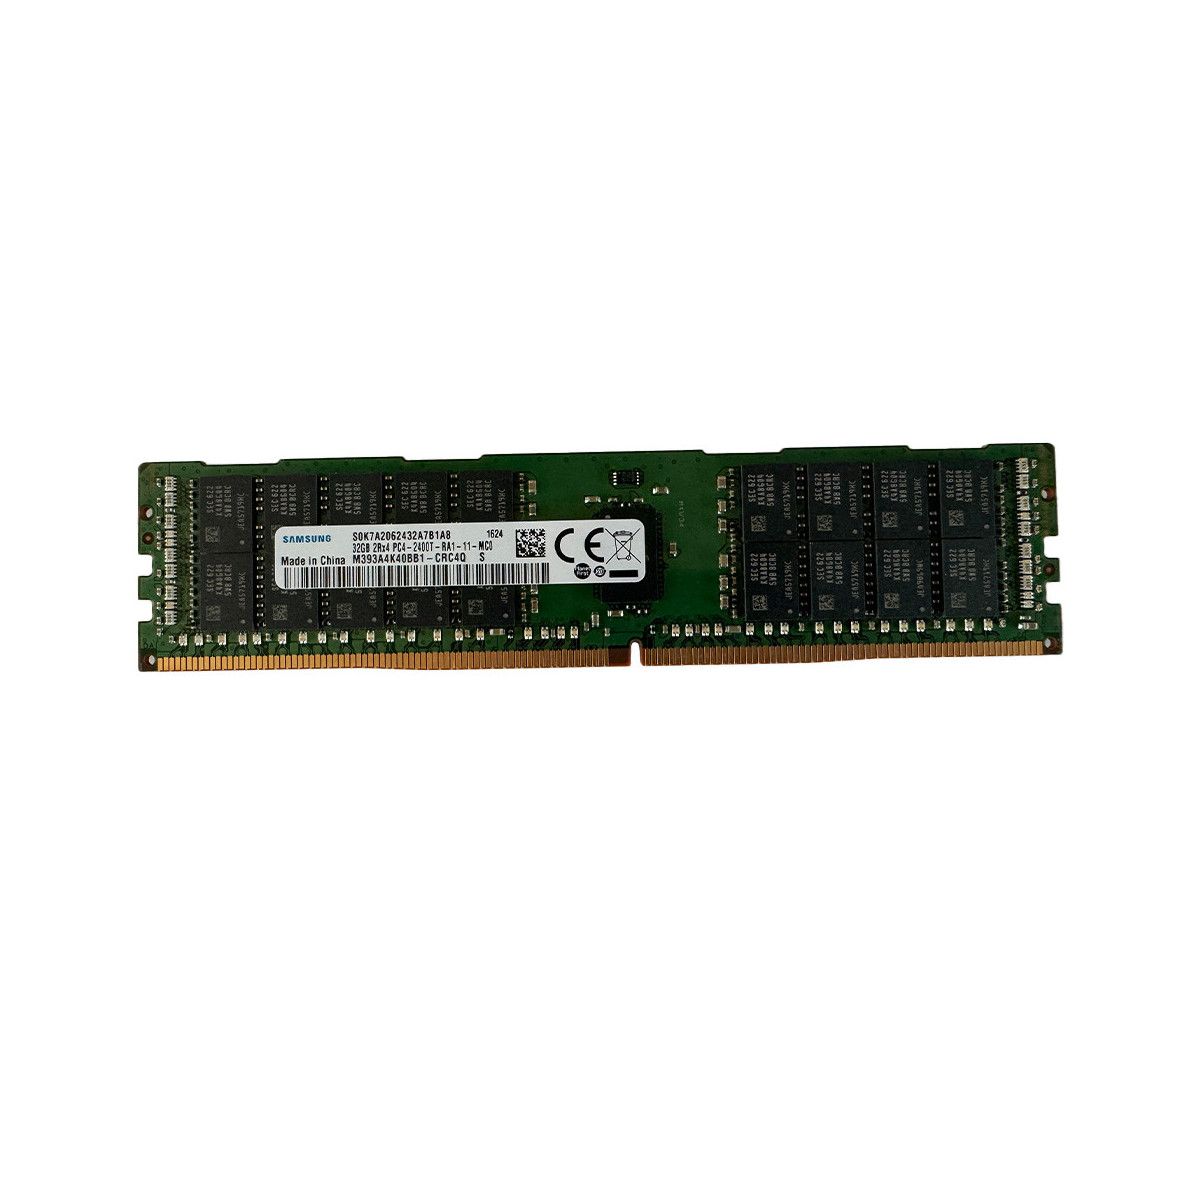 SNPCPC7GC/32G-MS - Memstar 1x 32GB DDR4-2400 RDIMM PC4-19200T-R - Mem-Star Compatible OEM Mémoire 1 - Memstar 